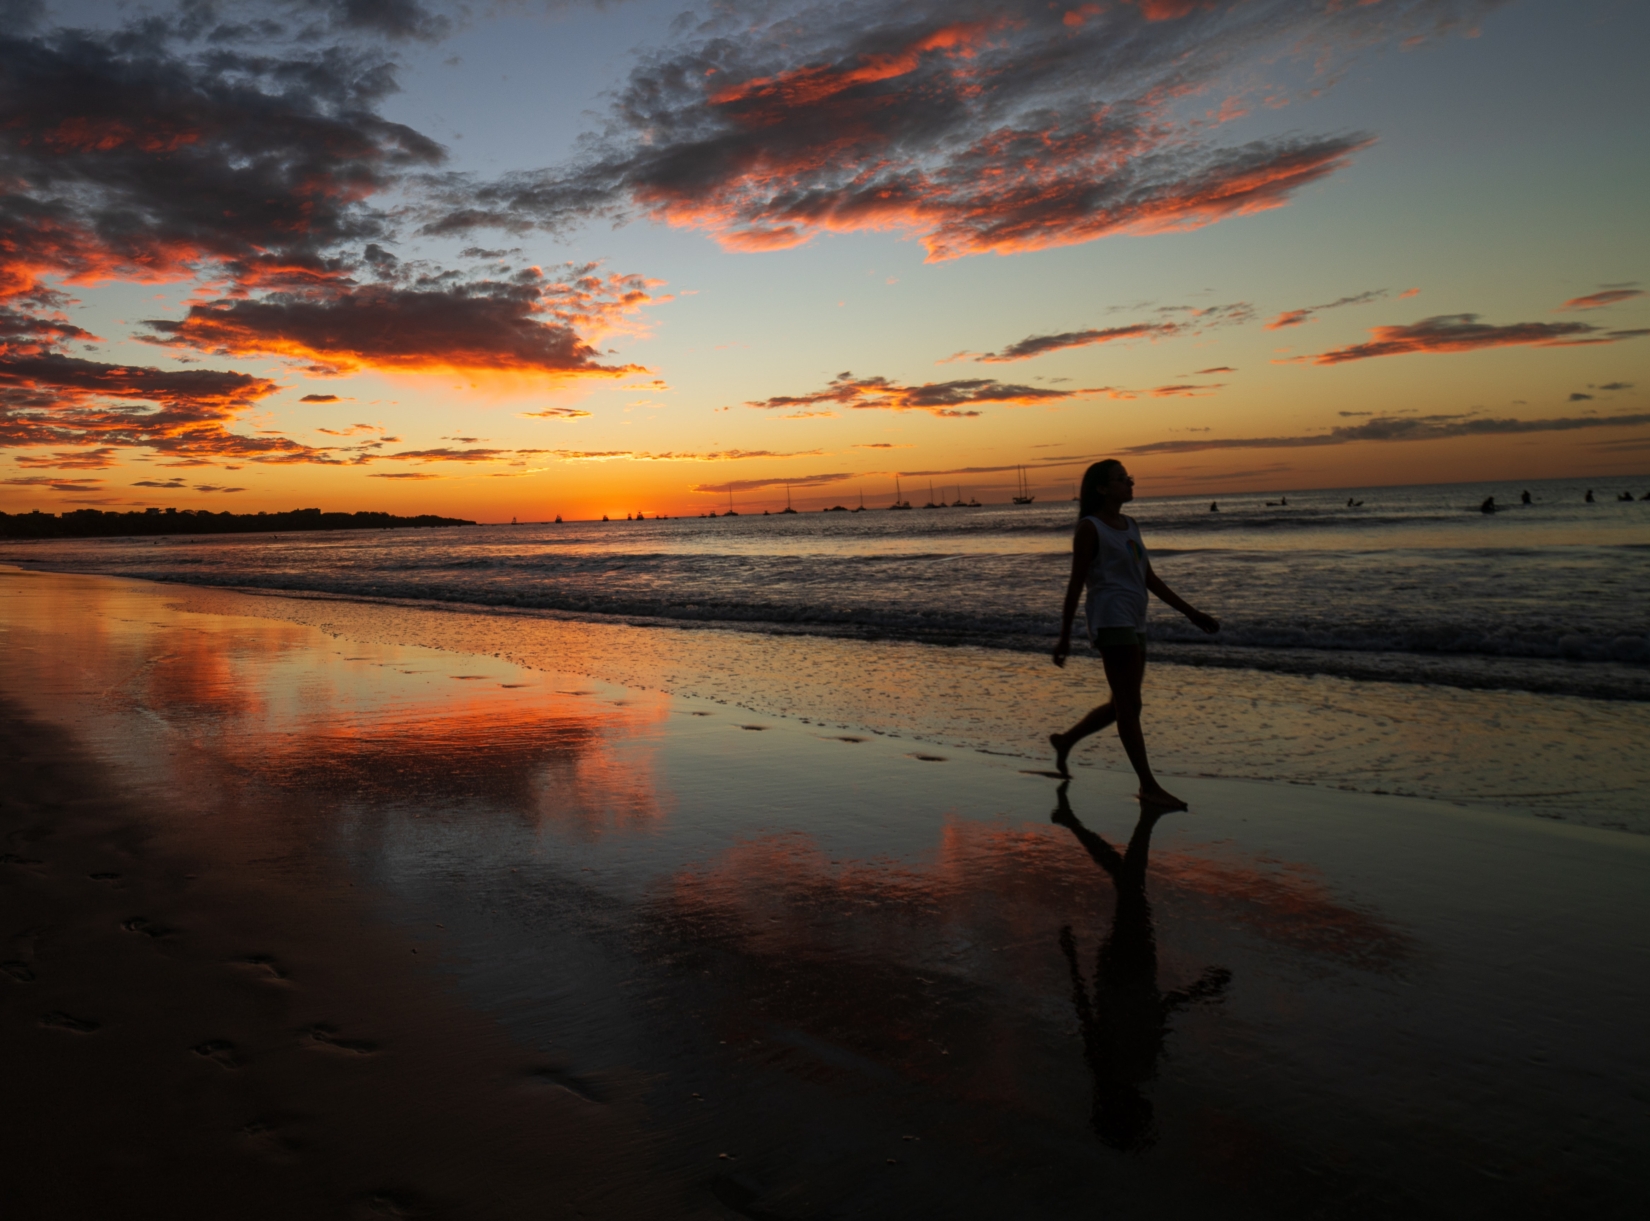 A woman walks along the beach at sunset as vibrant hues paint the sky